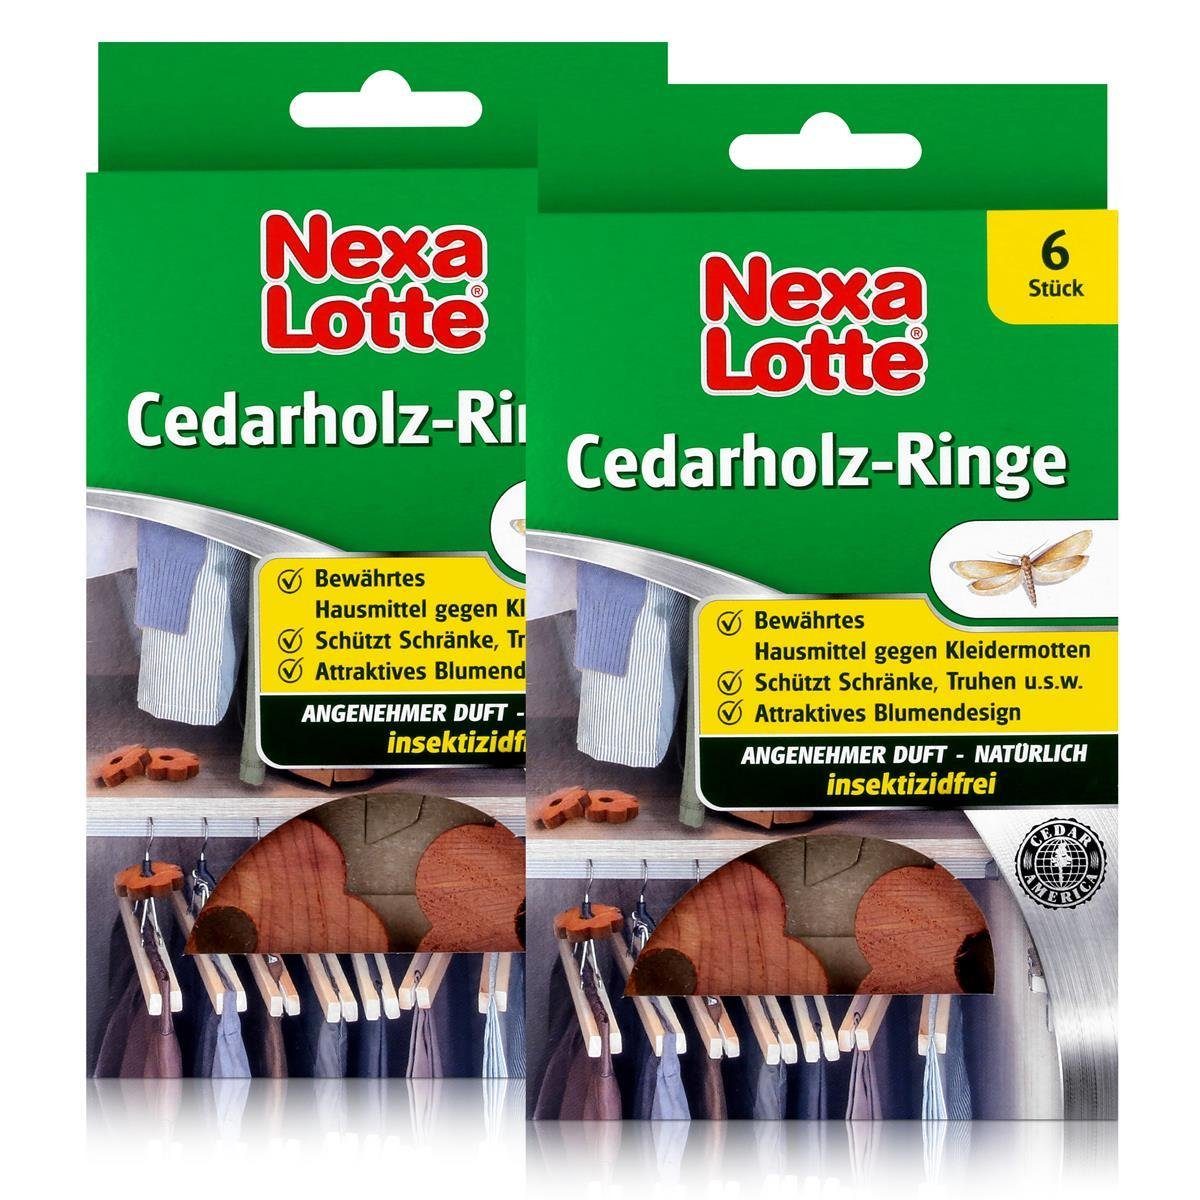 Nexa Lotte Insektenfalle Nexa Lotte Cedarholz-Ringe 6 stk. - angenehmer  Duft, insektizidfrei (2